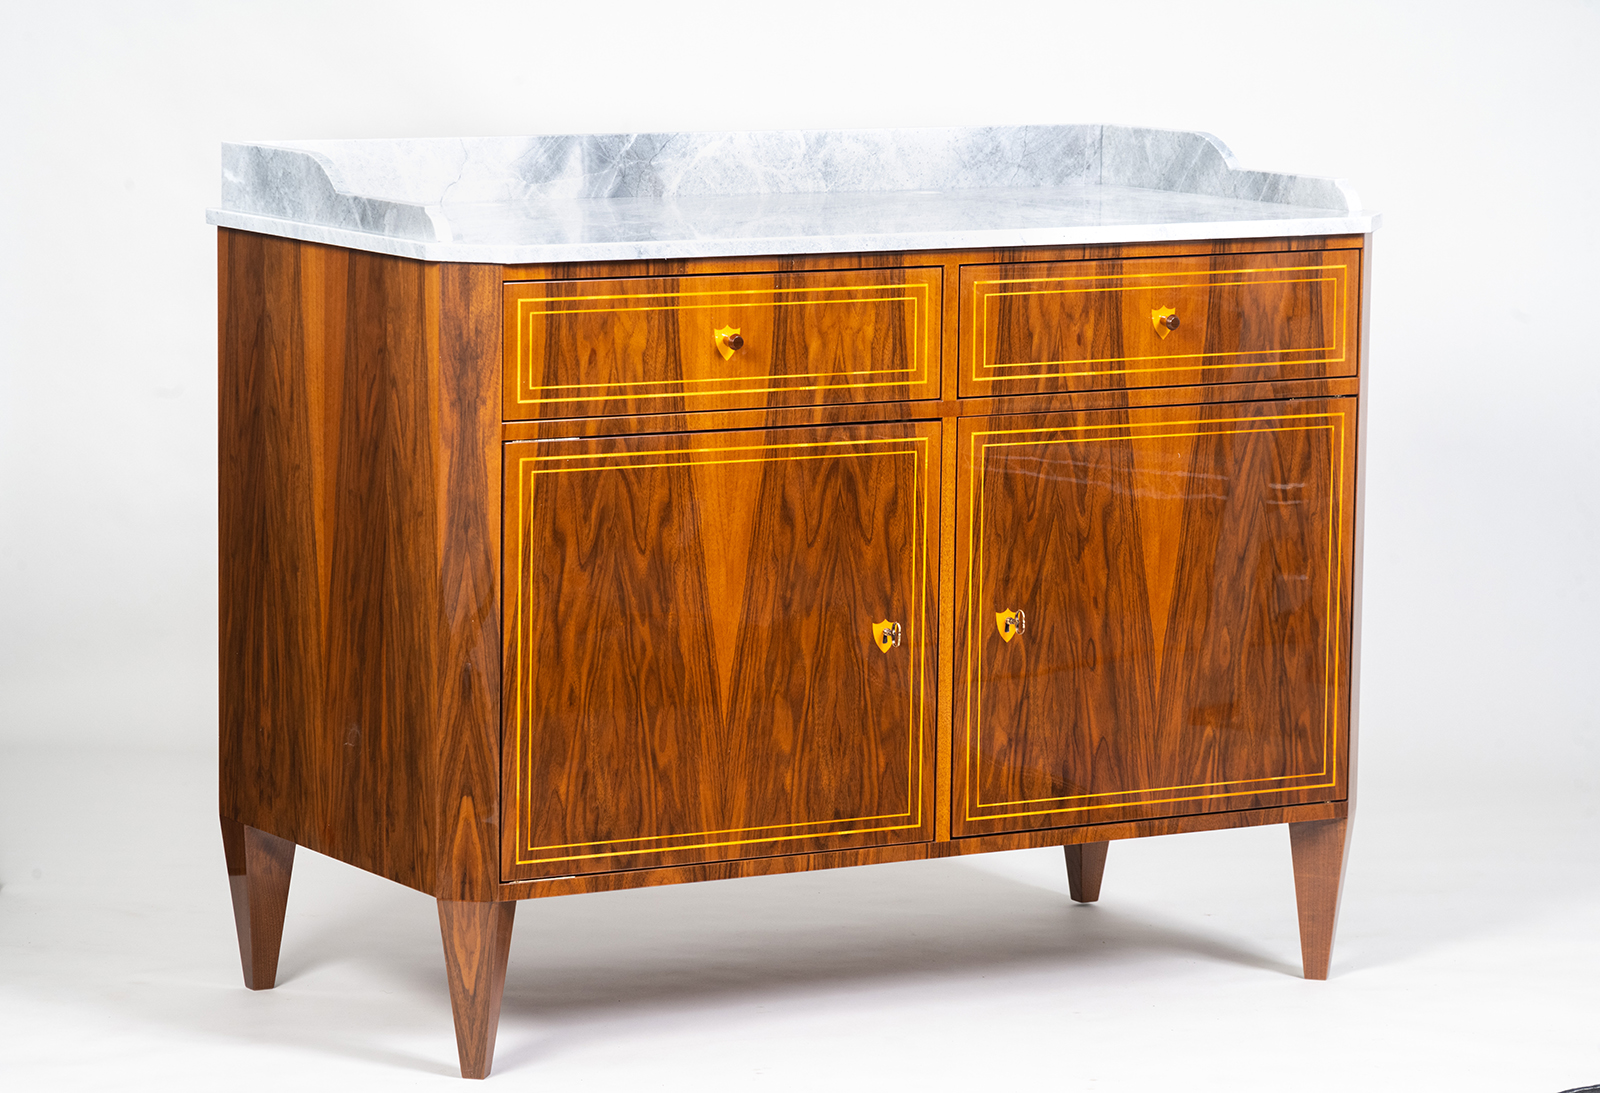 A Biedermeier Style Cabinet by ILIAD Design